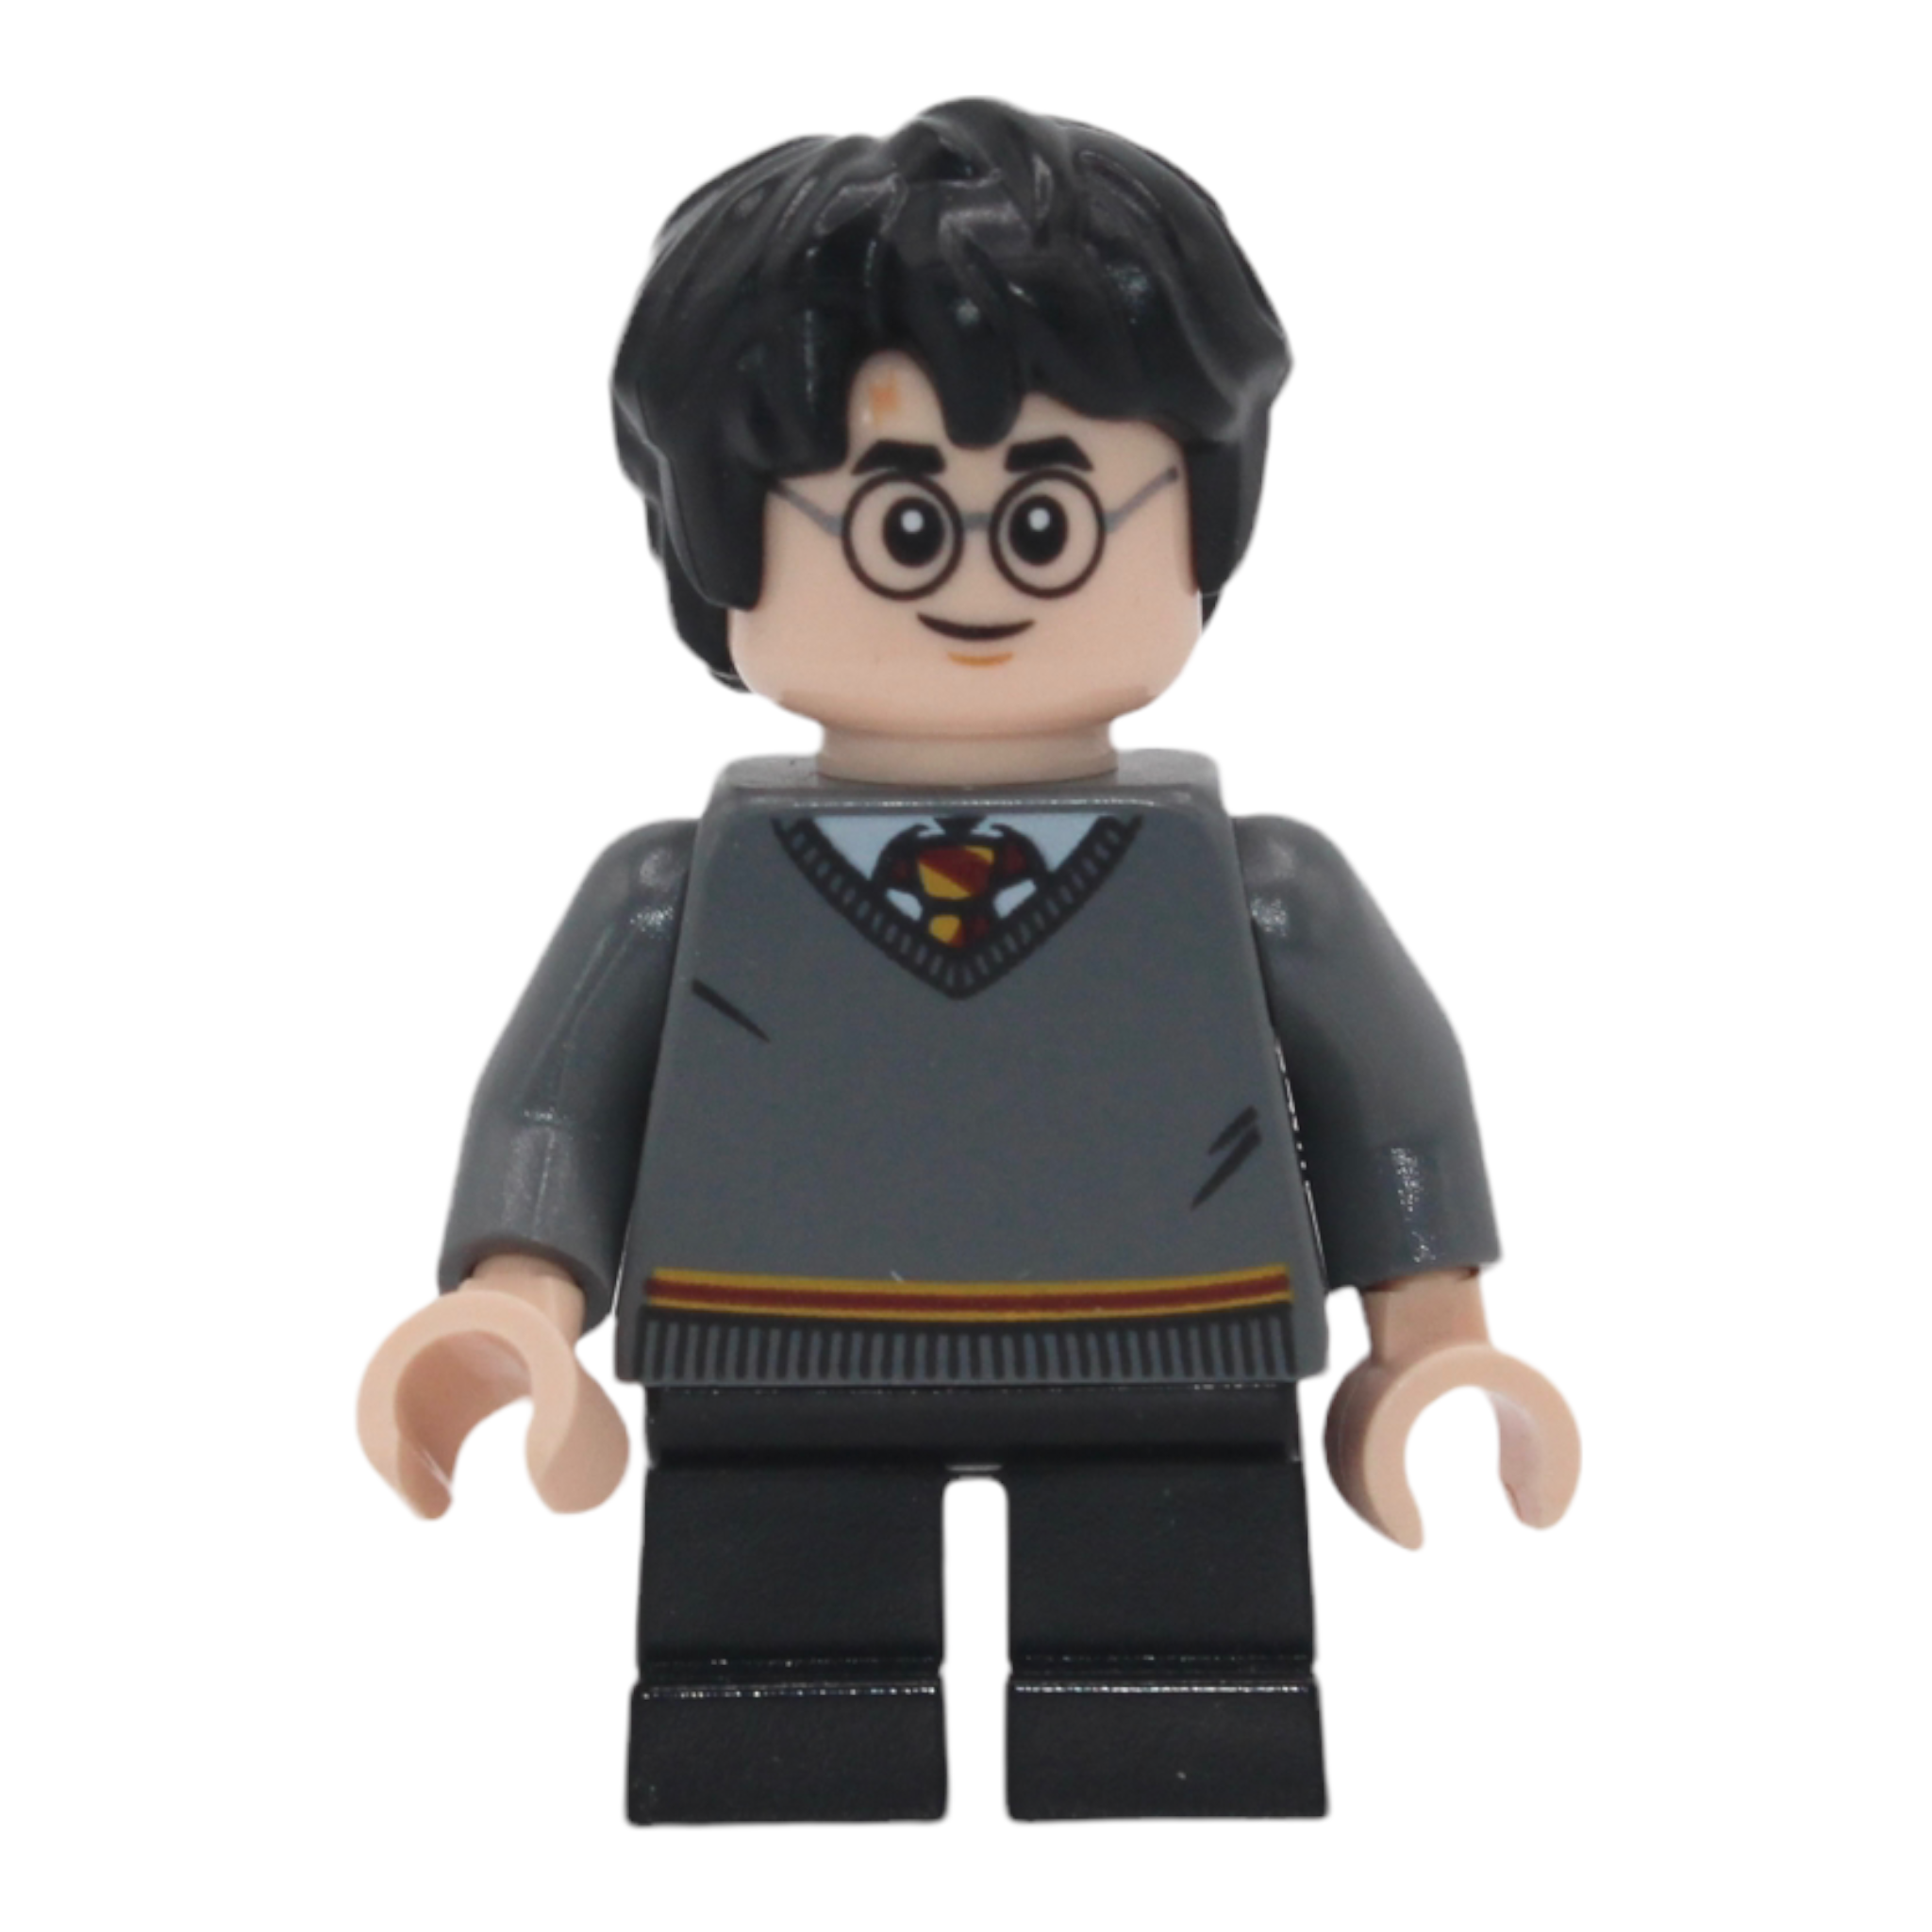 Harry Potter (short legs, Gryffindor sweater)